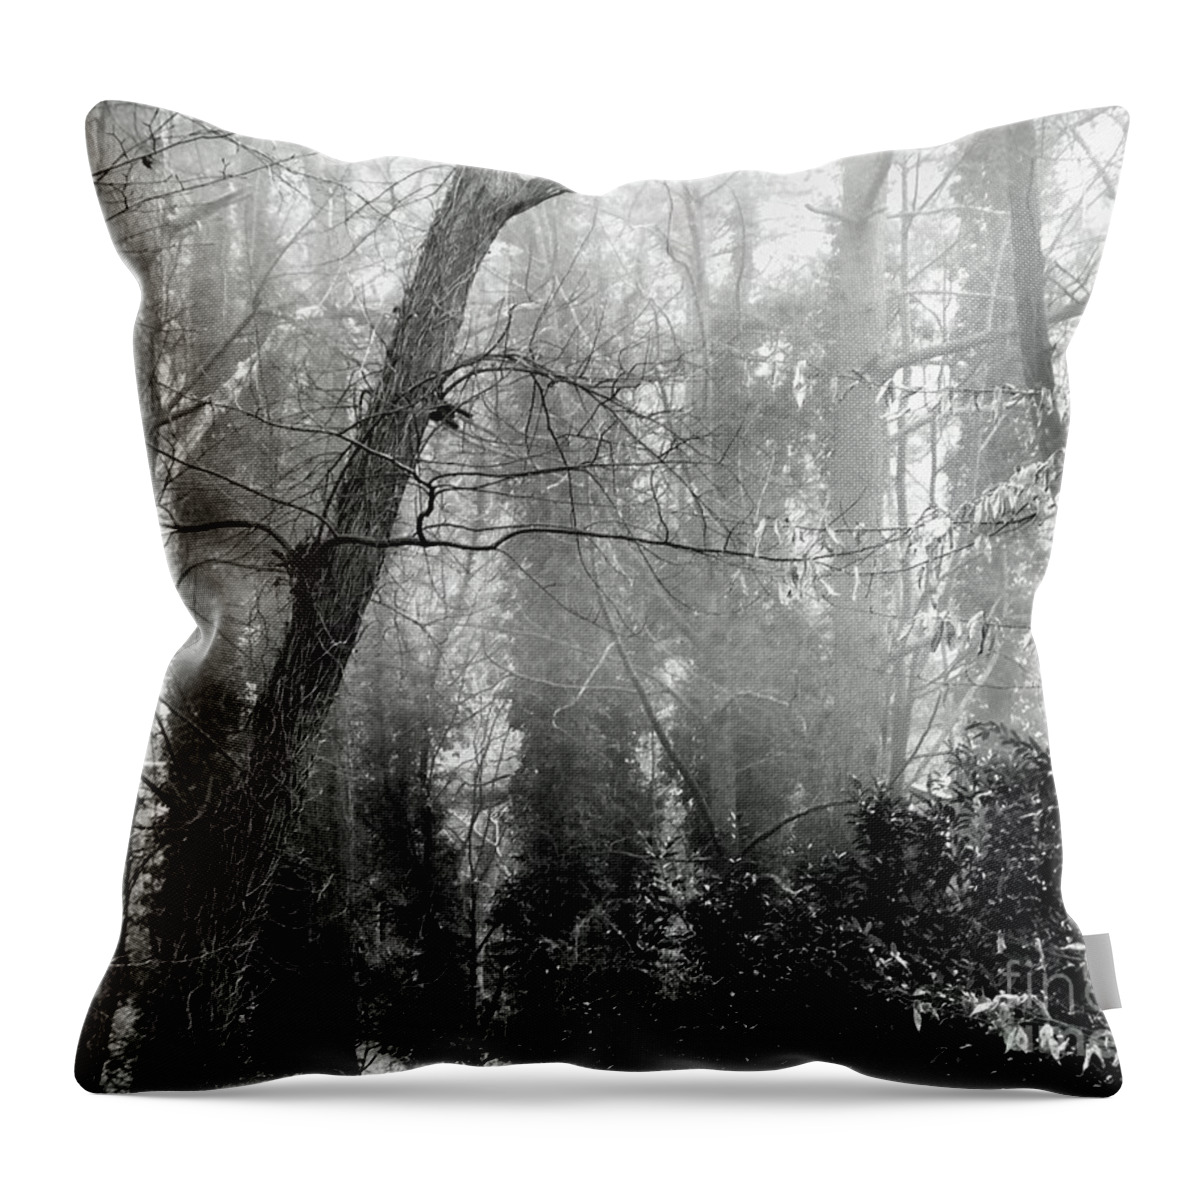 Fog Throw Pillow featuring the photograph Whitby65 Floodplain Forest by Lizi Beard-Ward